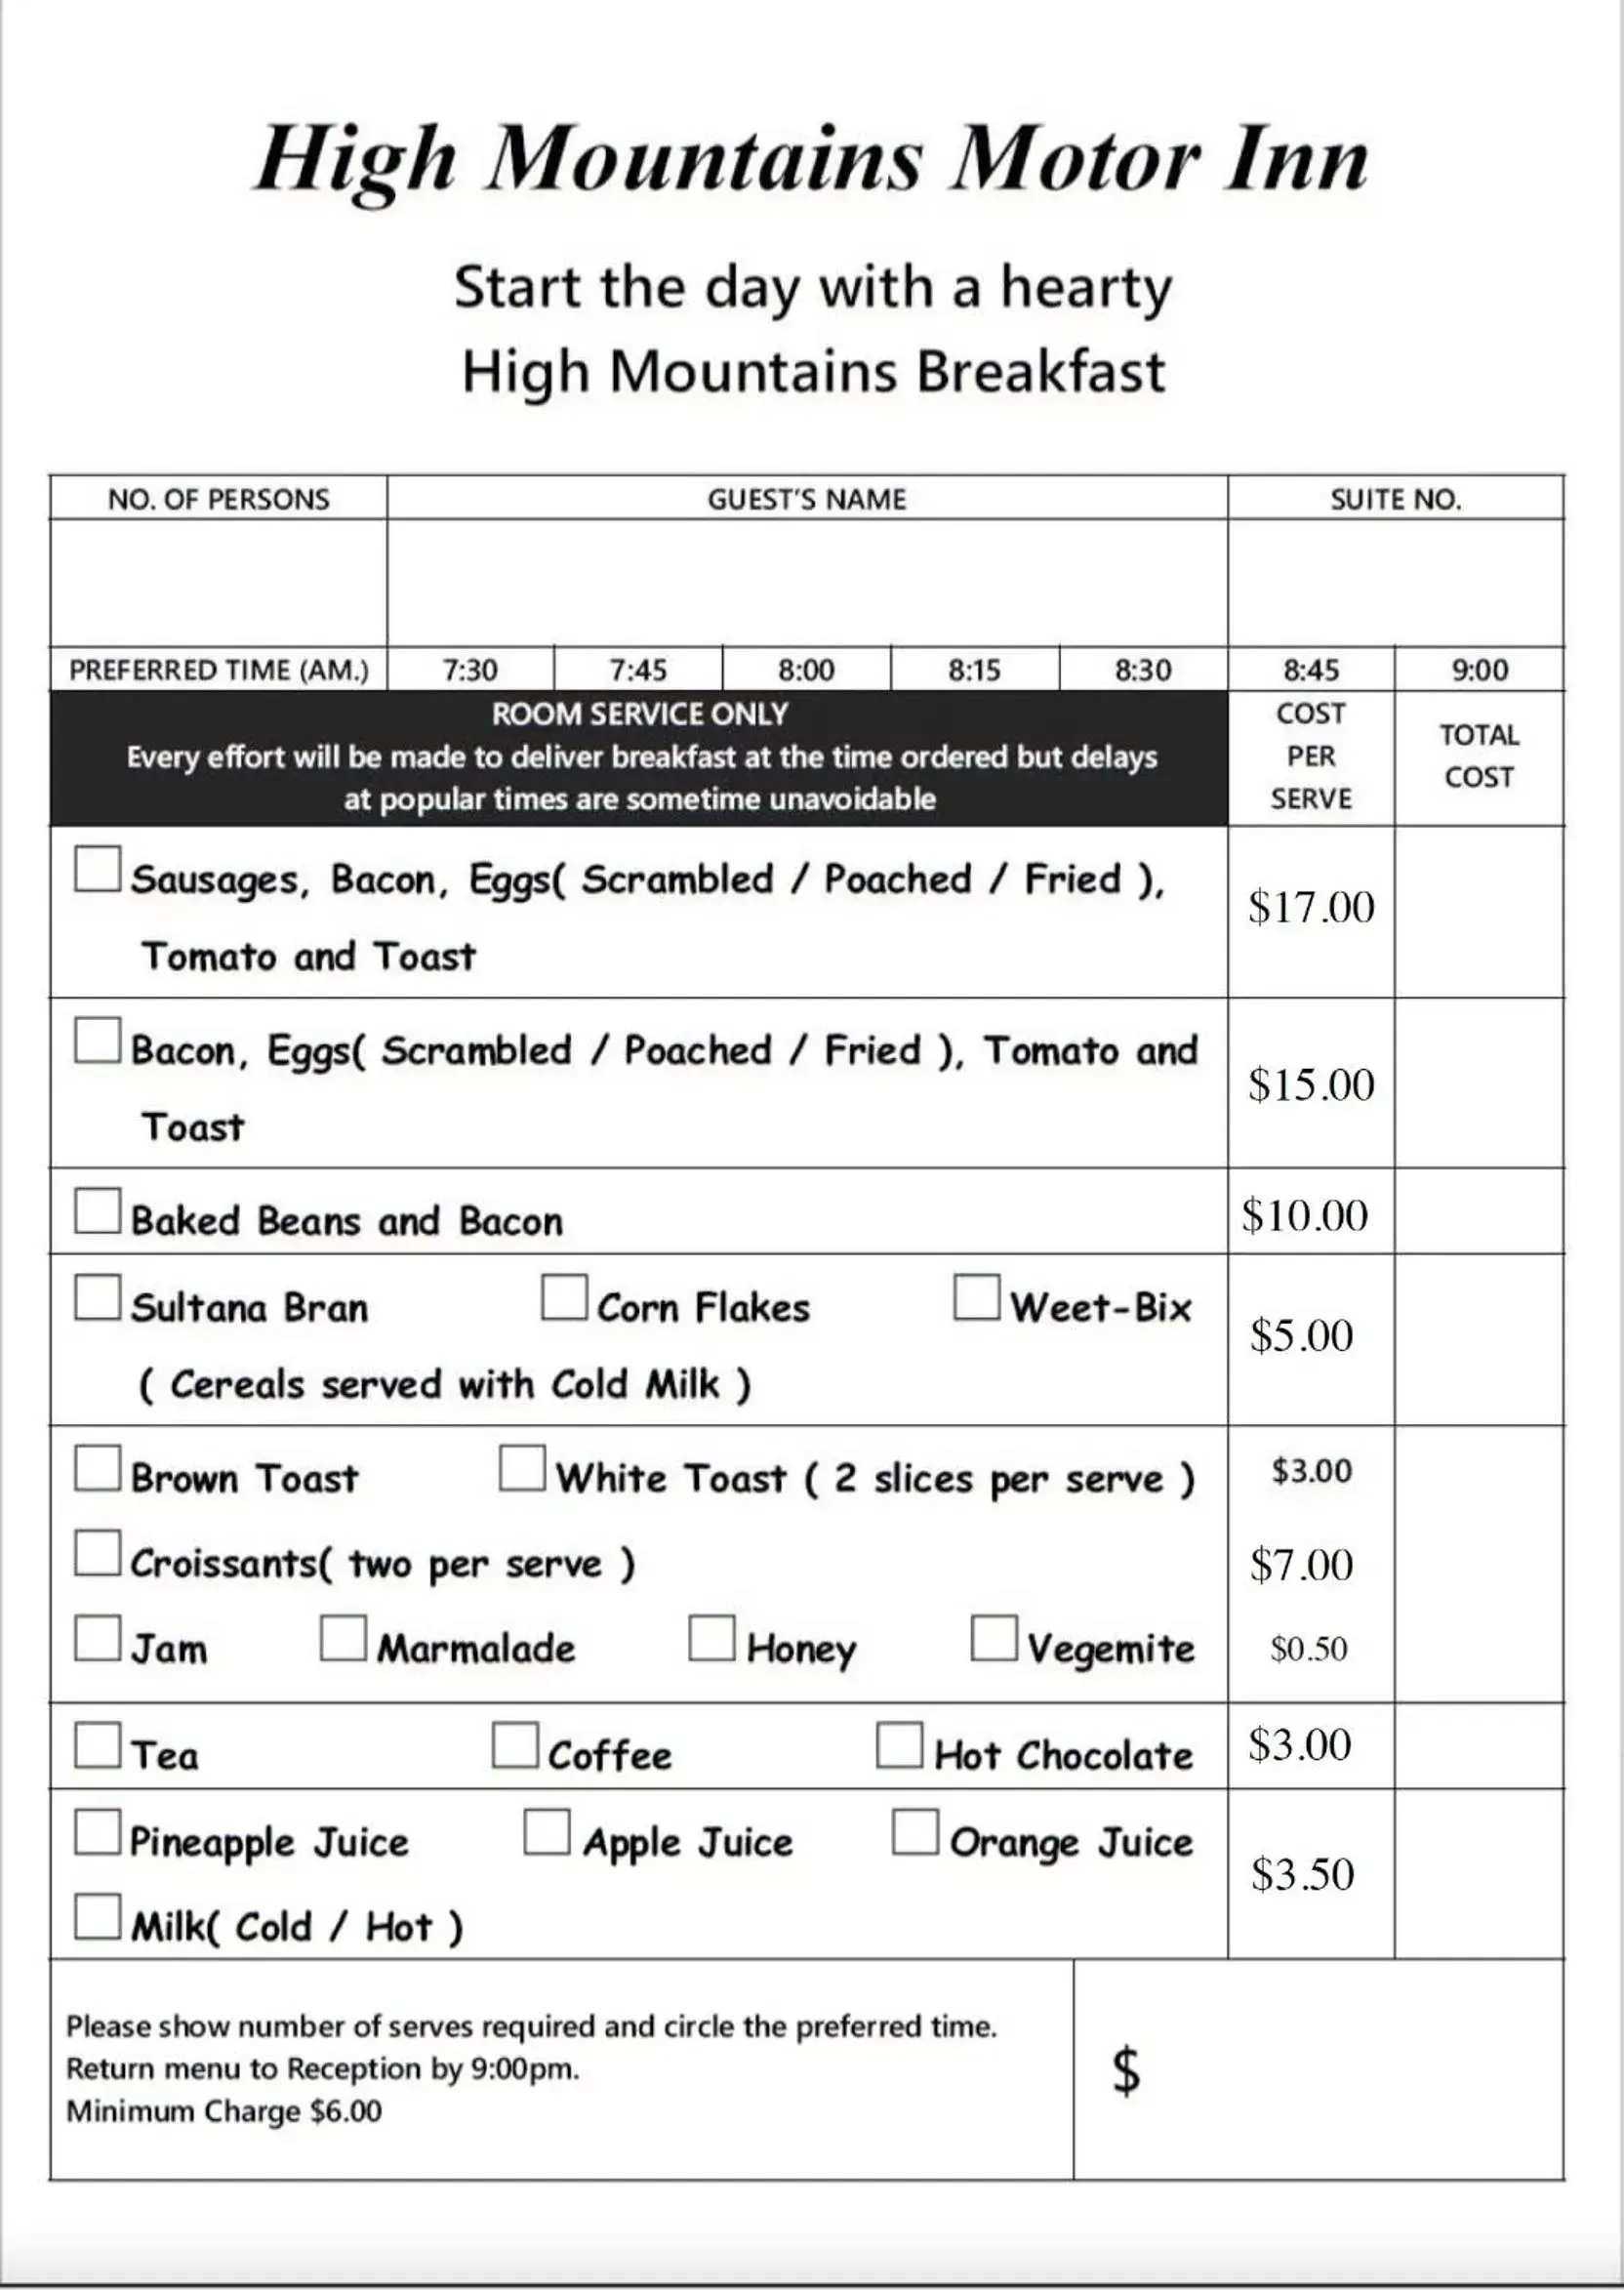 Breakfast in High Mountains Motor Inn